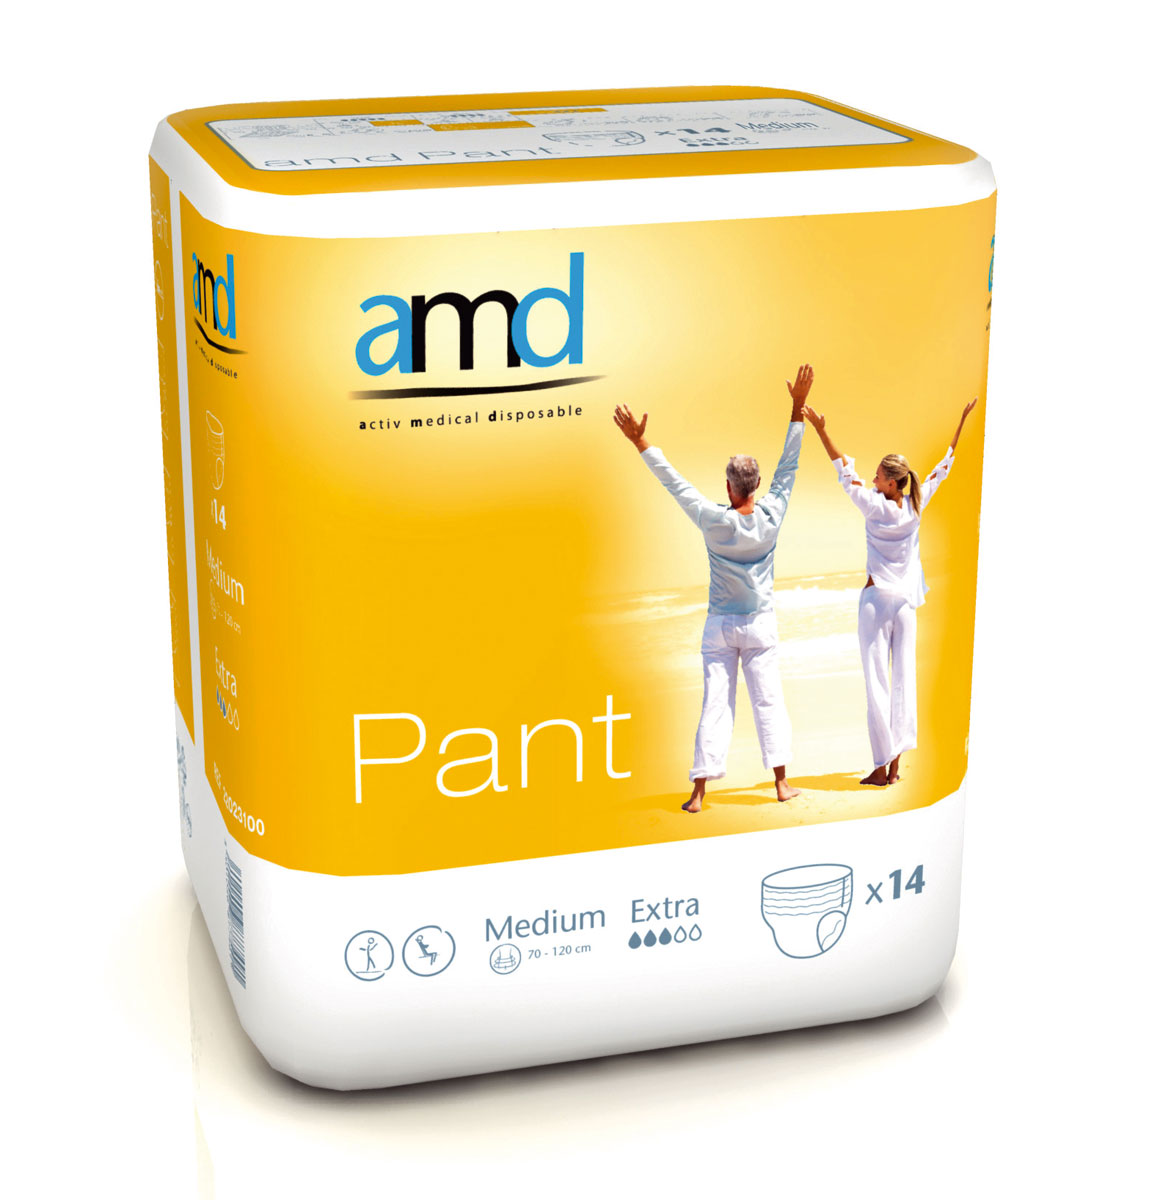 AMD Pant (EXTRA) - Inkontinenzpants - Gr. Medium (M) - 14 Stück Beutel